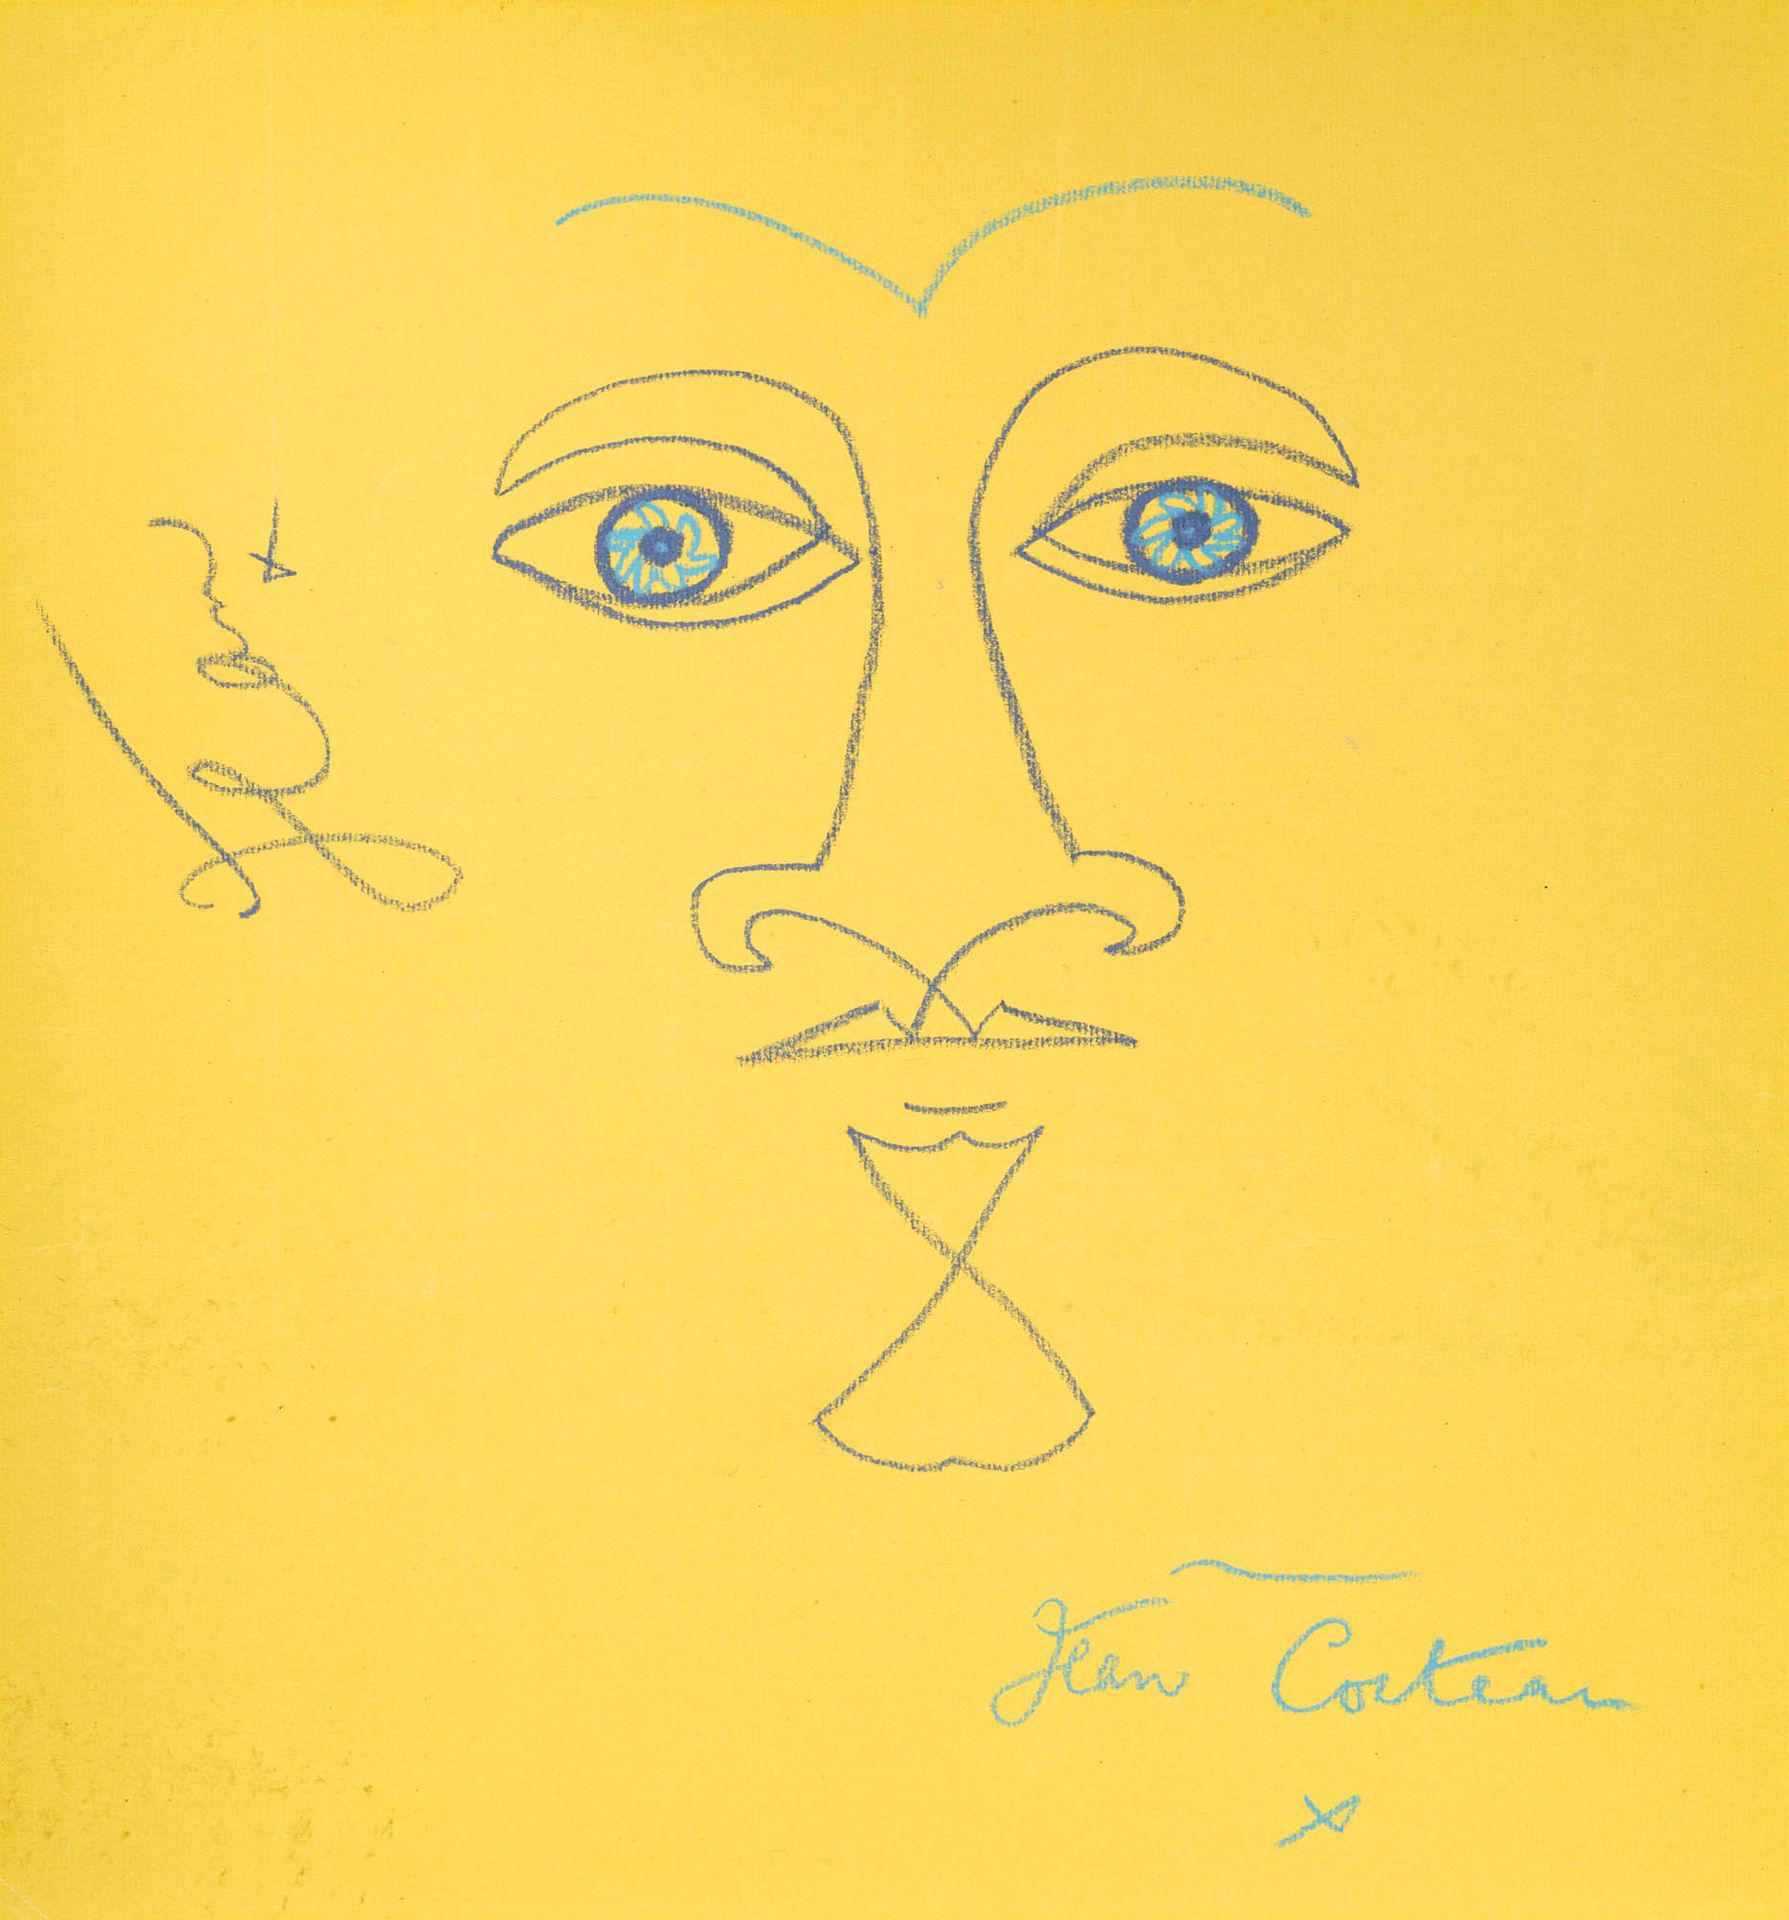 Jean Cocteau 1889–1963 Jean Cocteau 1889-1963

愿景

纸上粉笔画

中间偏左的签名是Jean

右下方有Jean&hellip;